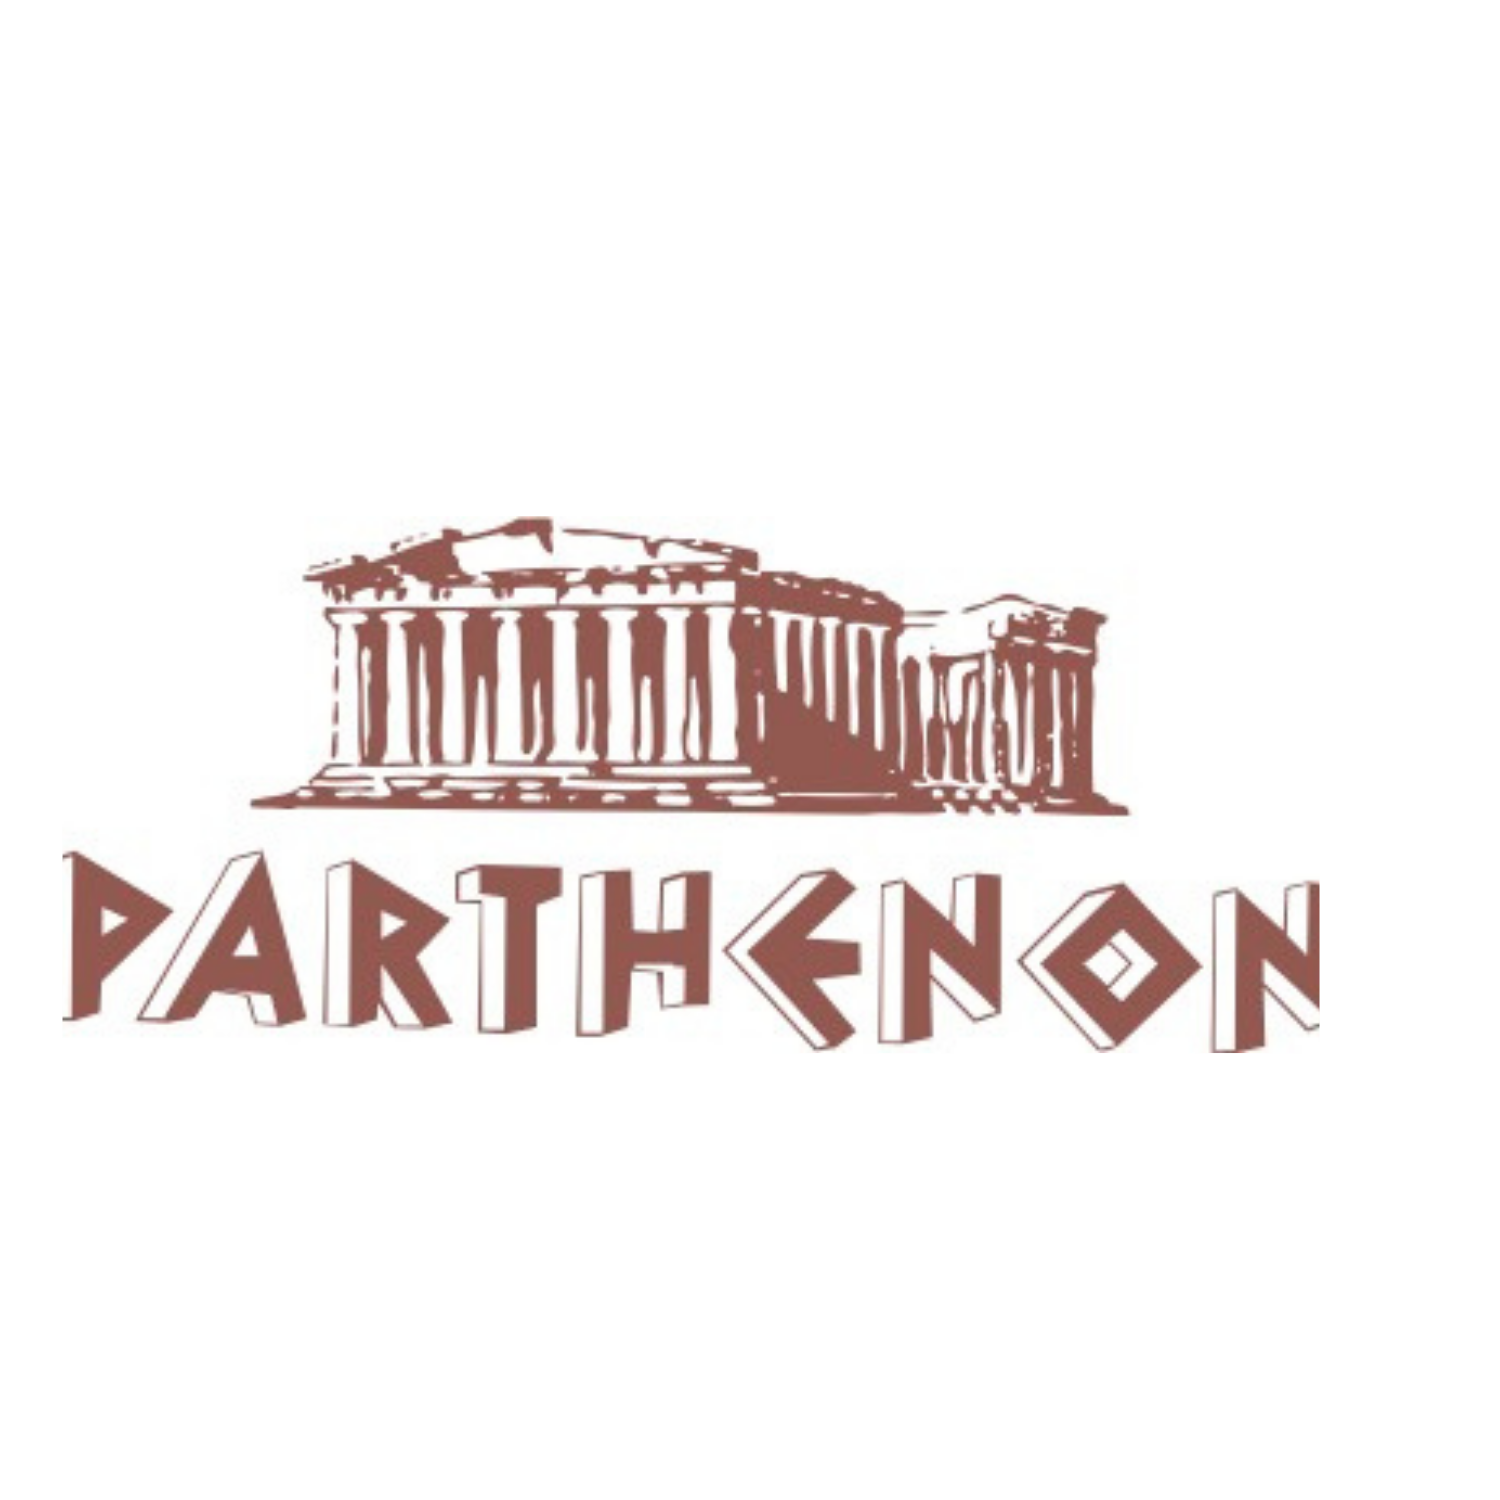 Parthenon Restaurant